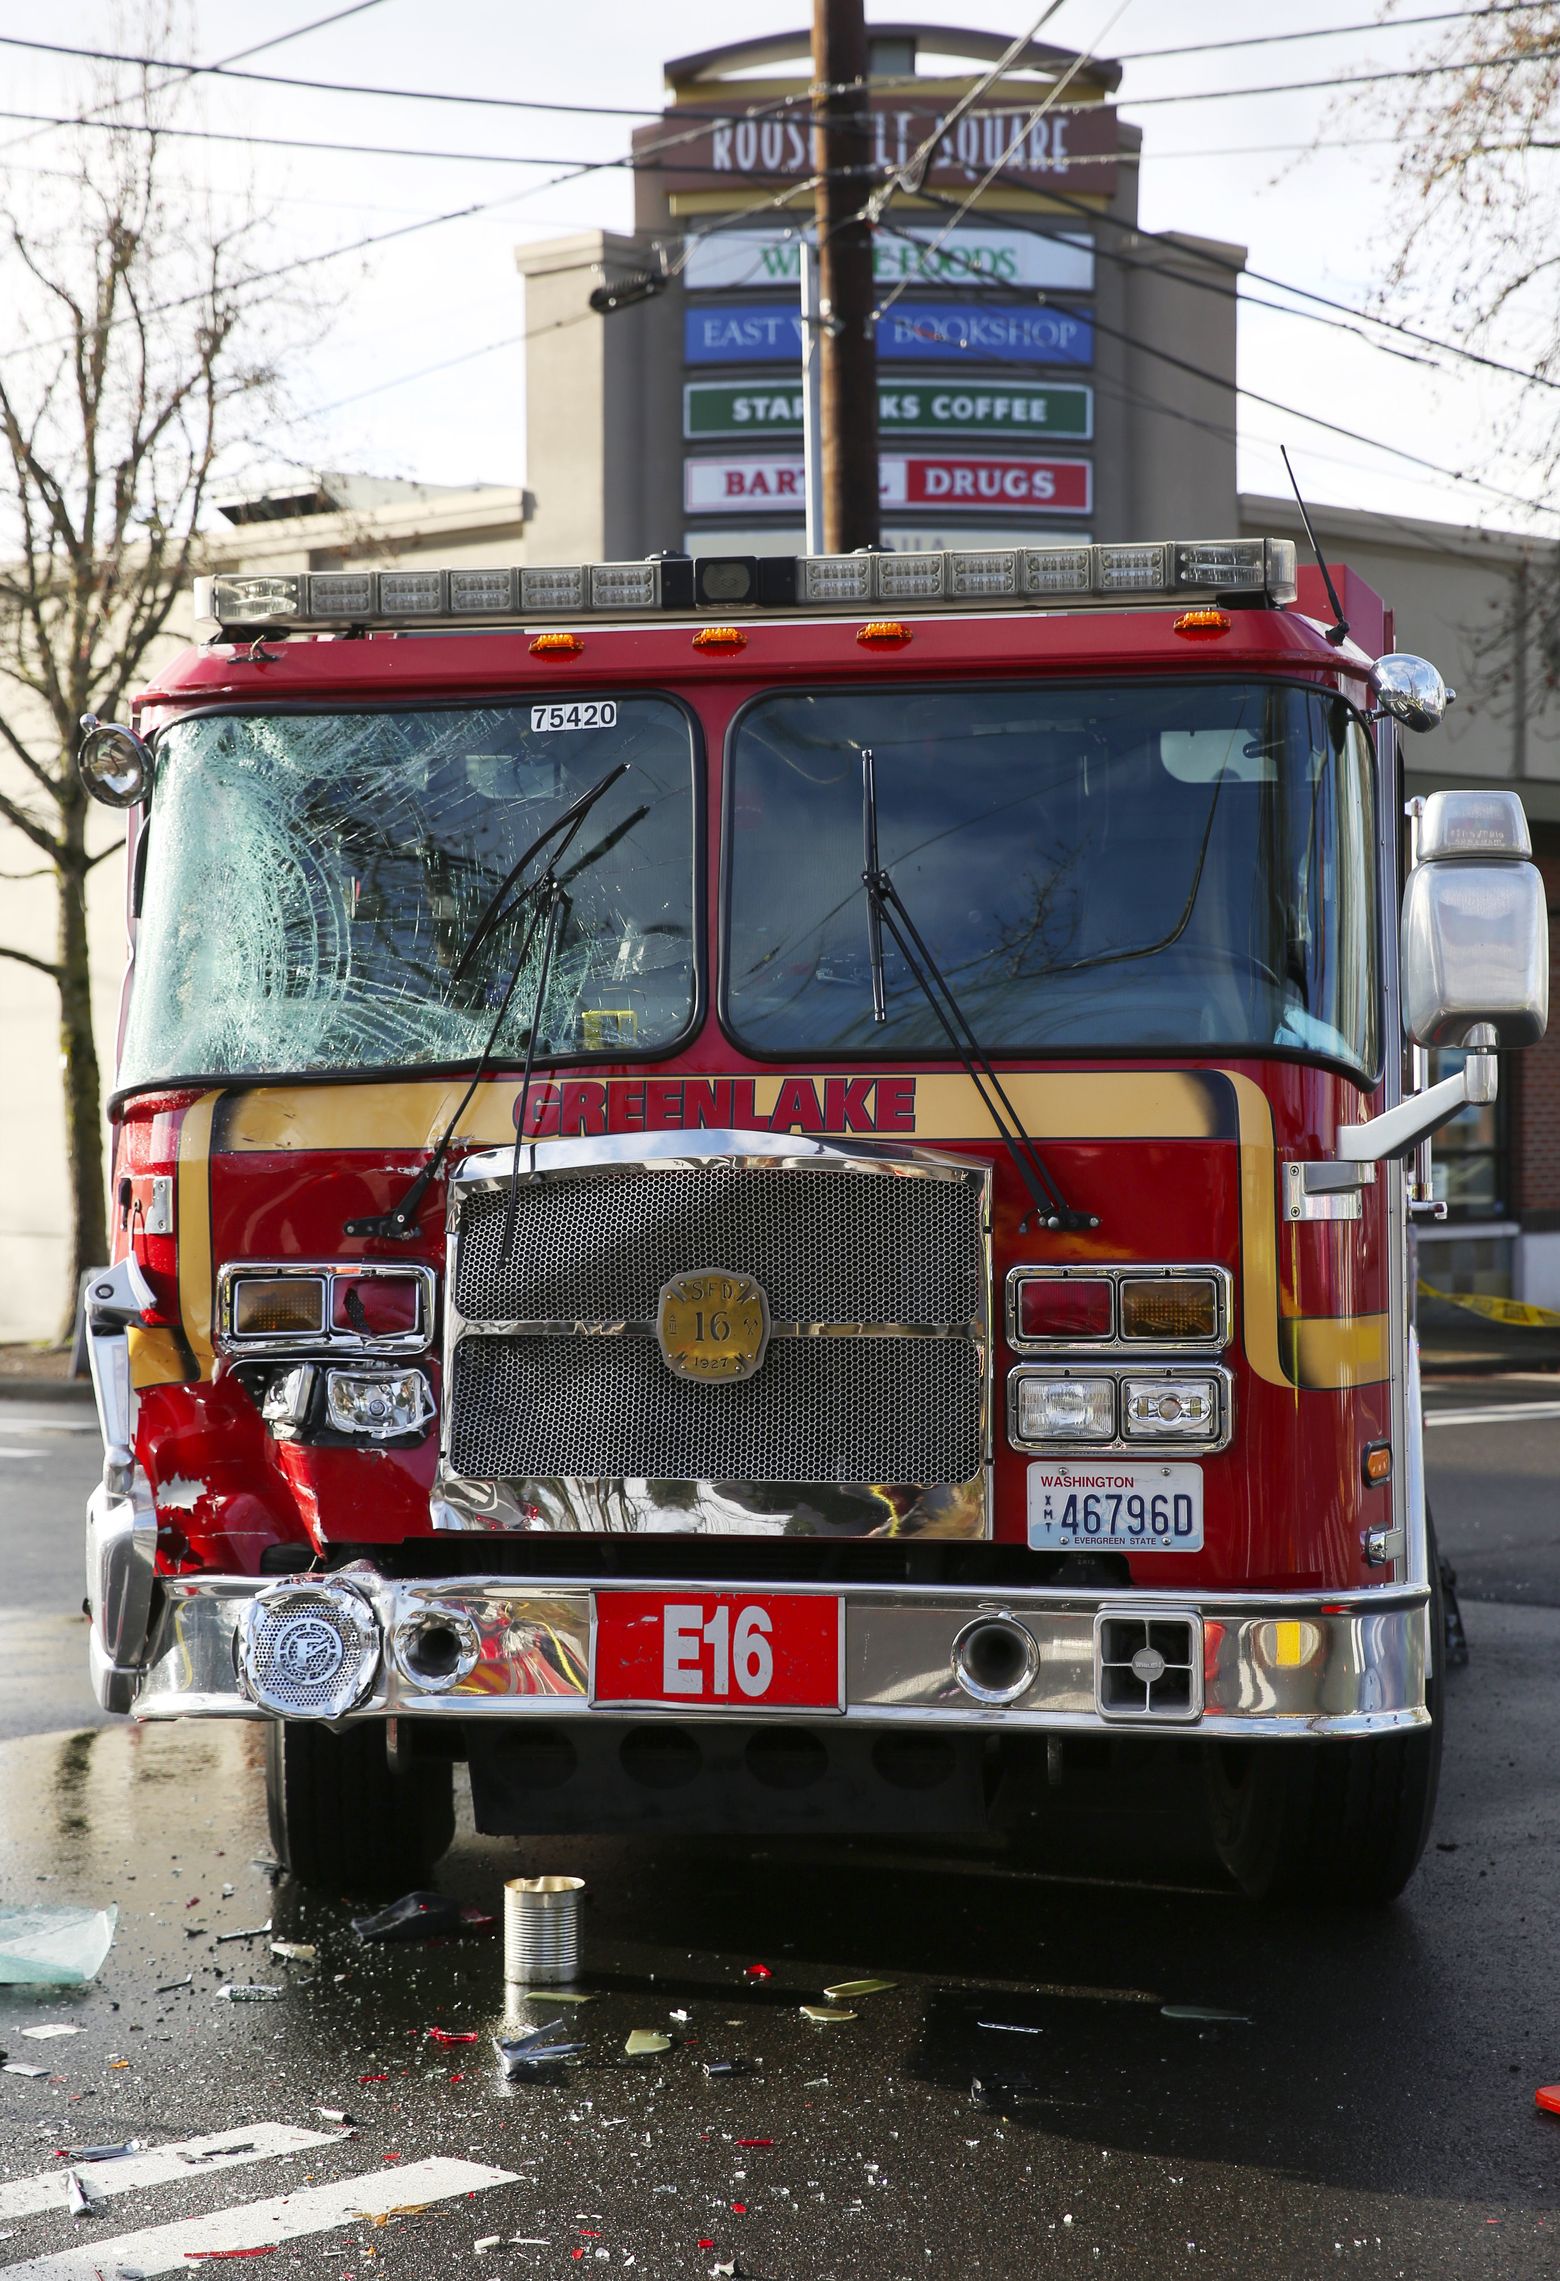 2 firetrucks collide, sending 8 firefighters to hospital, damaging